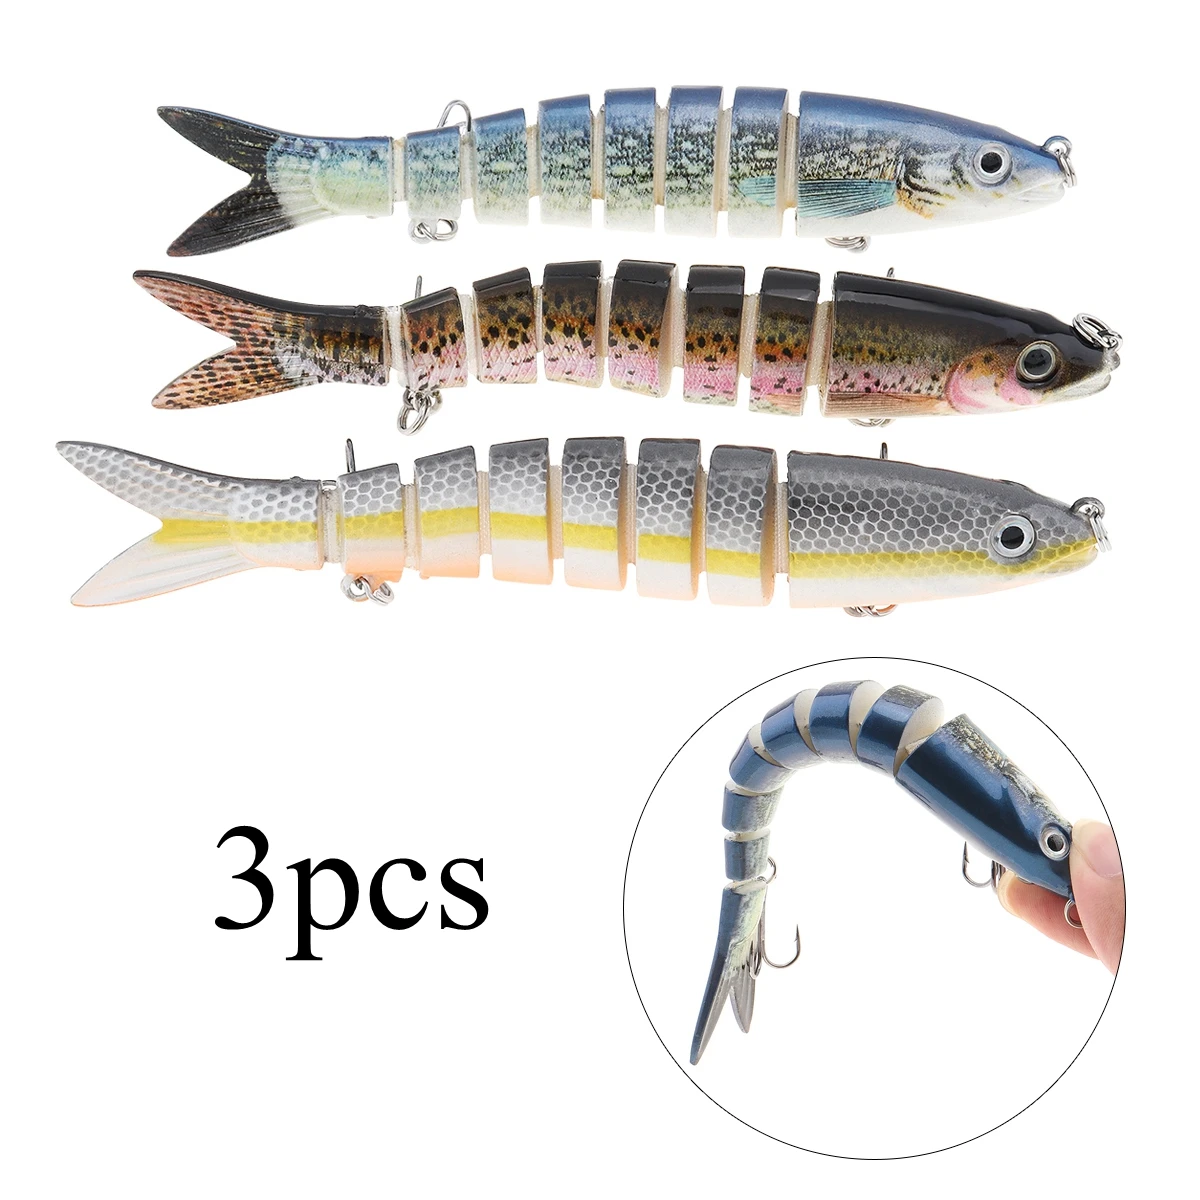 

3pcs 8 Segments Fishing Lures 13.5cm 19g Fish Minnow Swimbait Tackle Hook Crank Bait Colorful